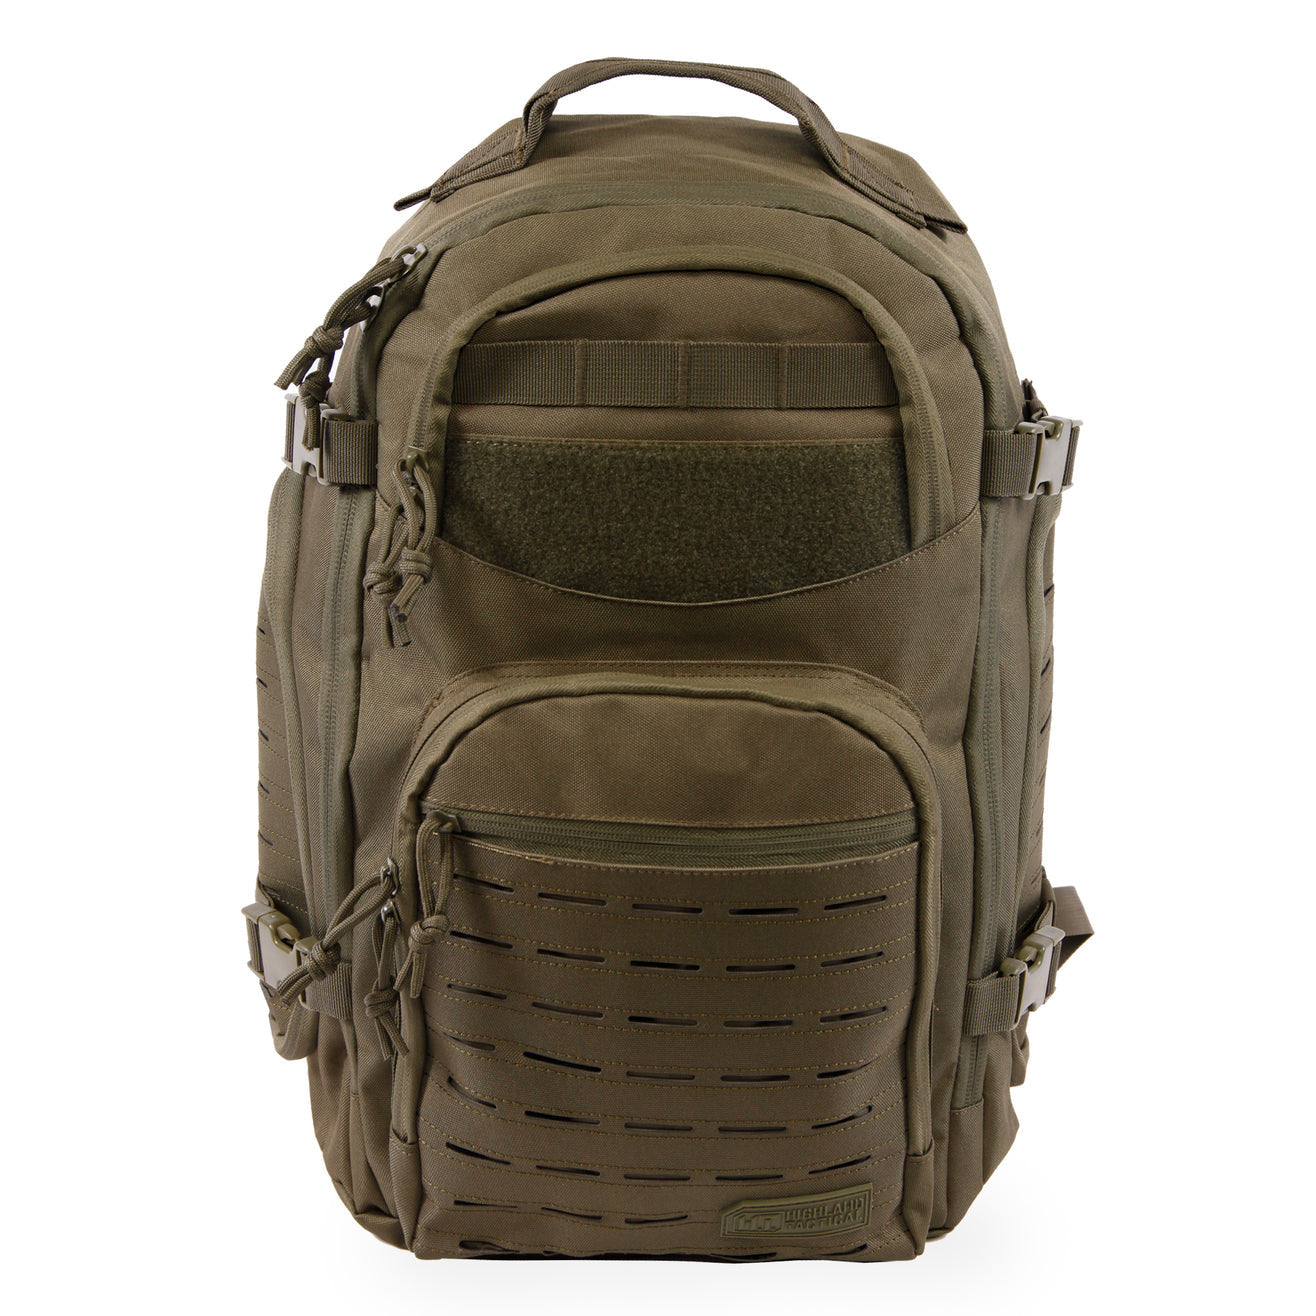 Roger Tactical Backpack